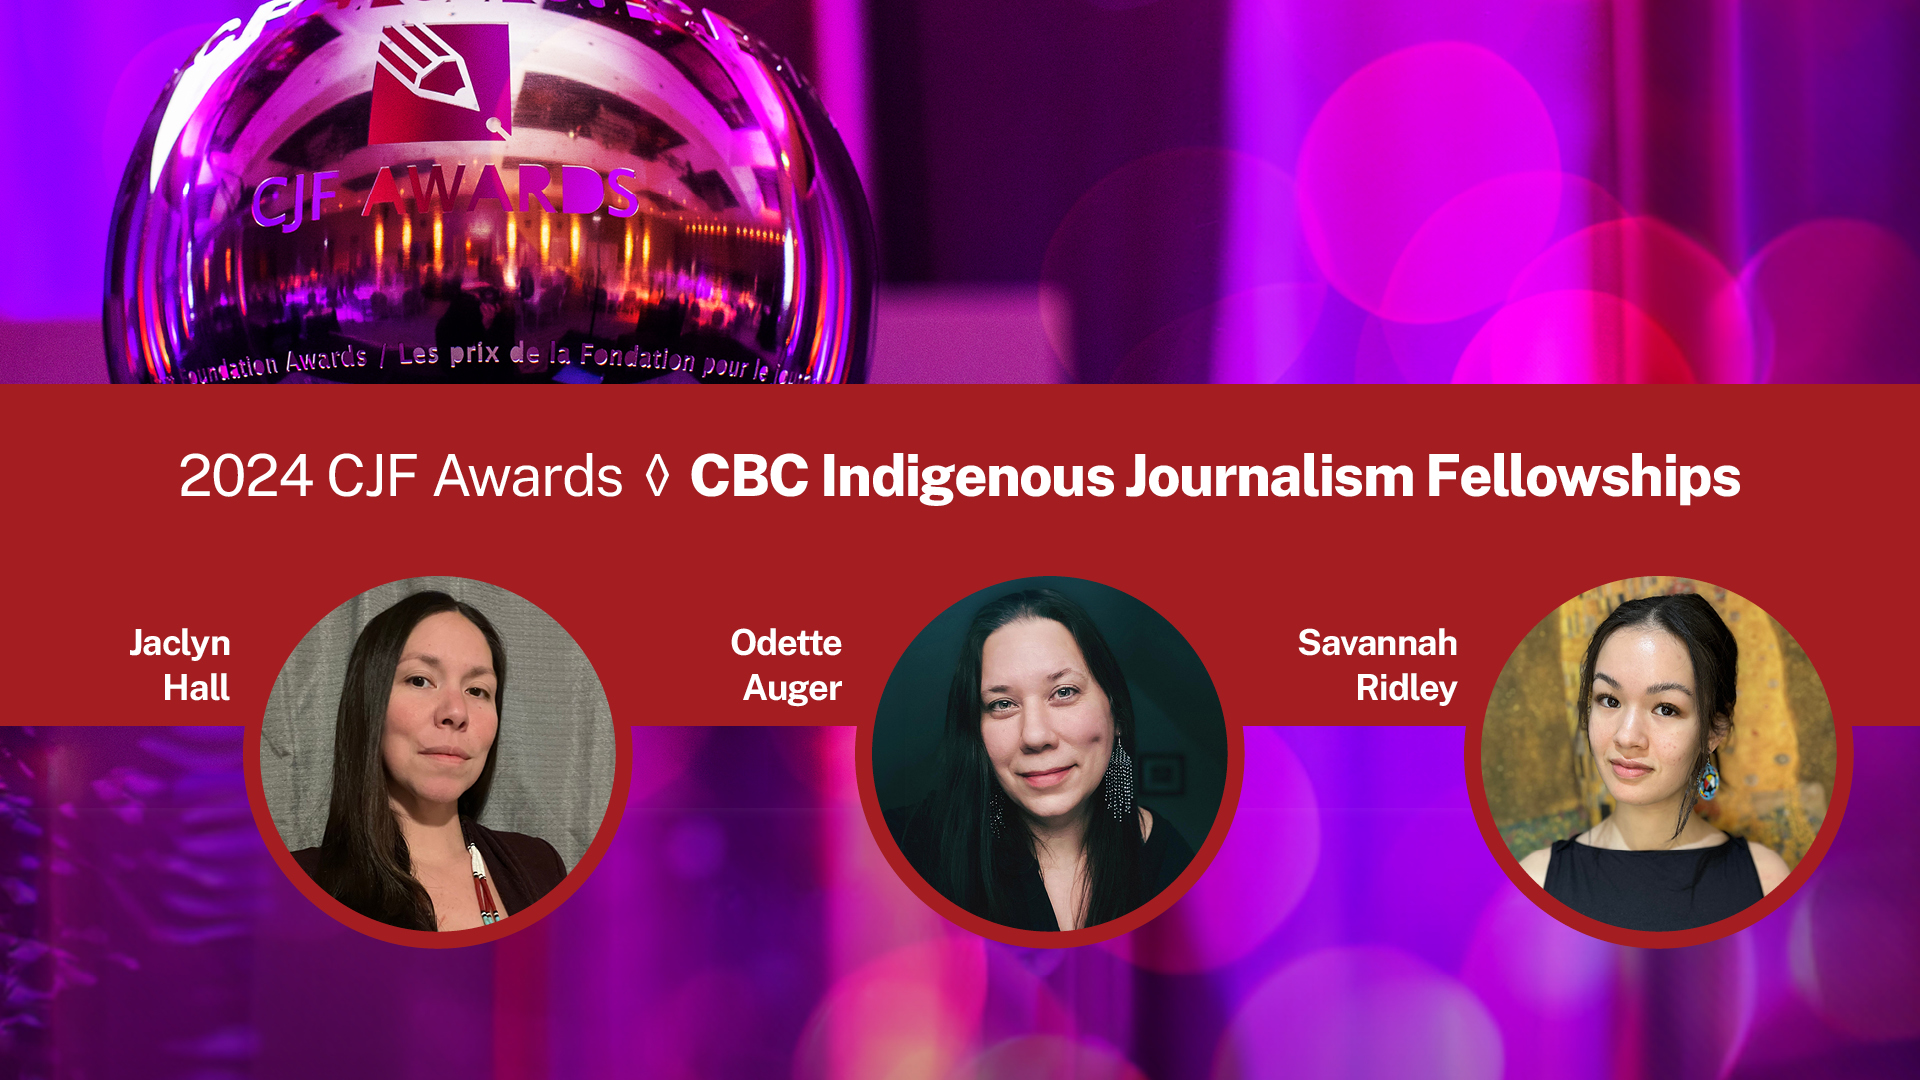 2024 CJF Indigenous Journalism Fellows: Jaclyn Hall, Odette Auger, Savannah Ridley